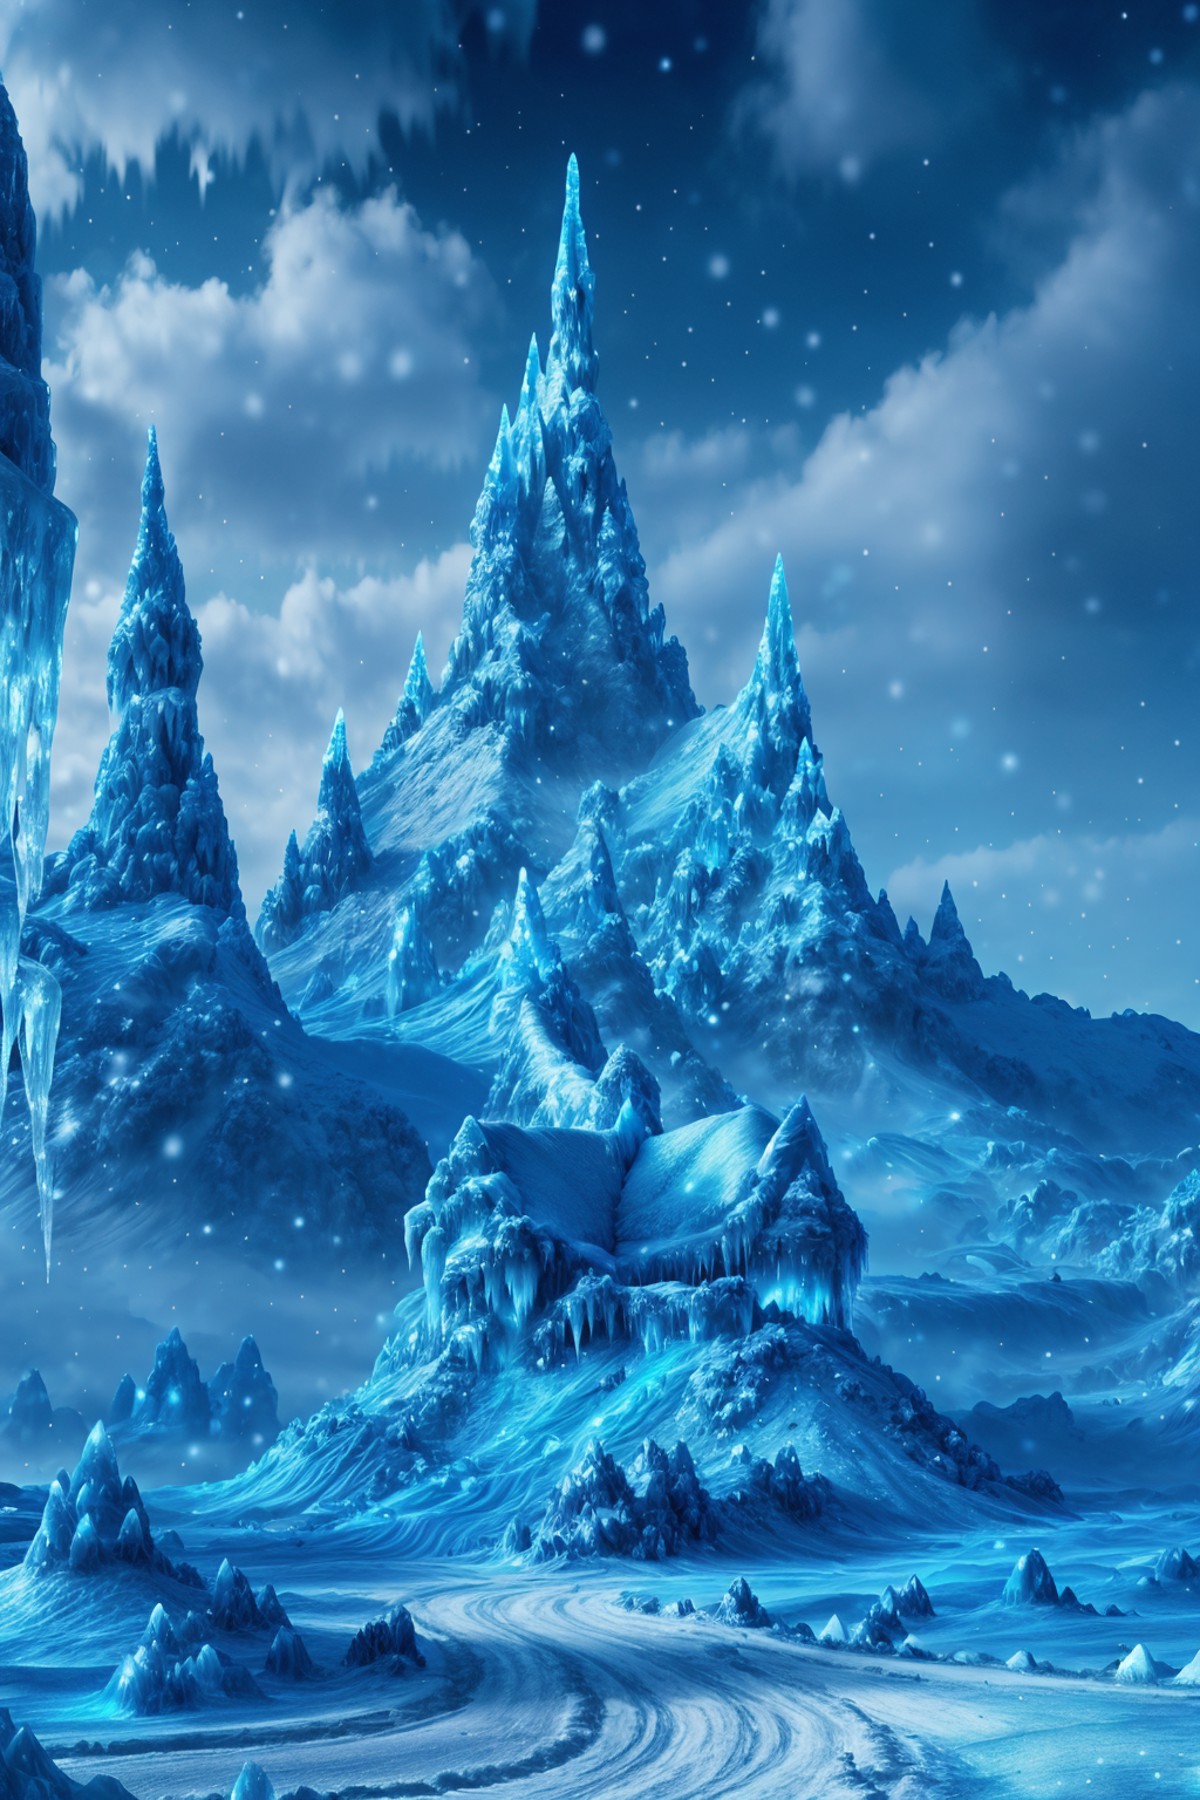 <lora:Xmas3:0.7> Xmas (landscape:0.5) with ice covered, fantasy, cinematic, christmas style blue background